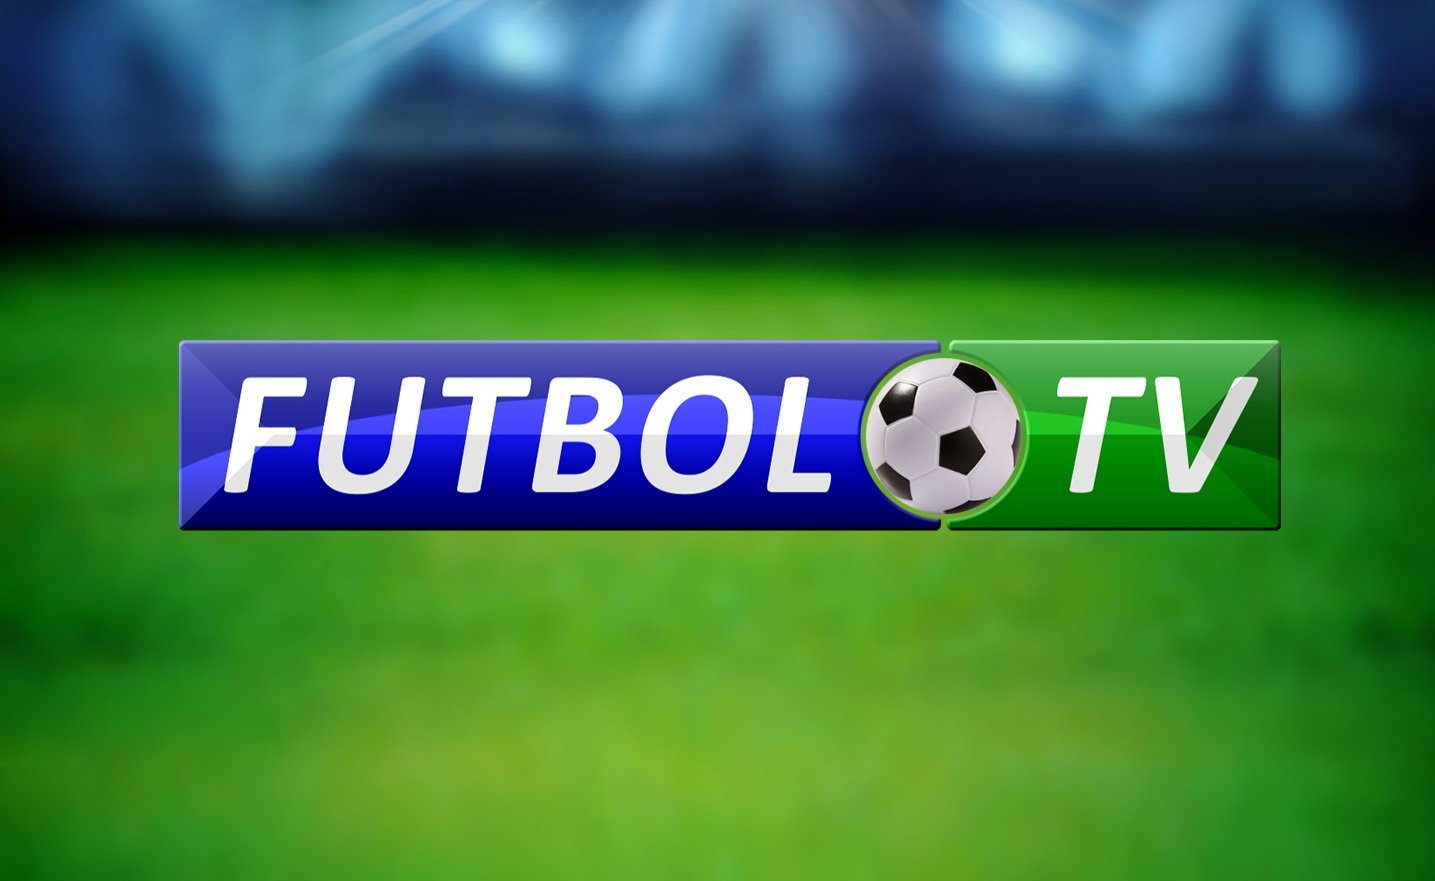 Футбол 24 тв. Футбол ТВ. Узбекистан футбол ТВ каналы. Логотип Futbol TV. Футбол канал Узбекистан.